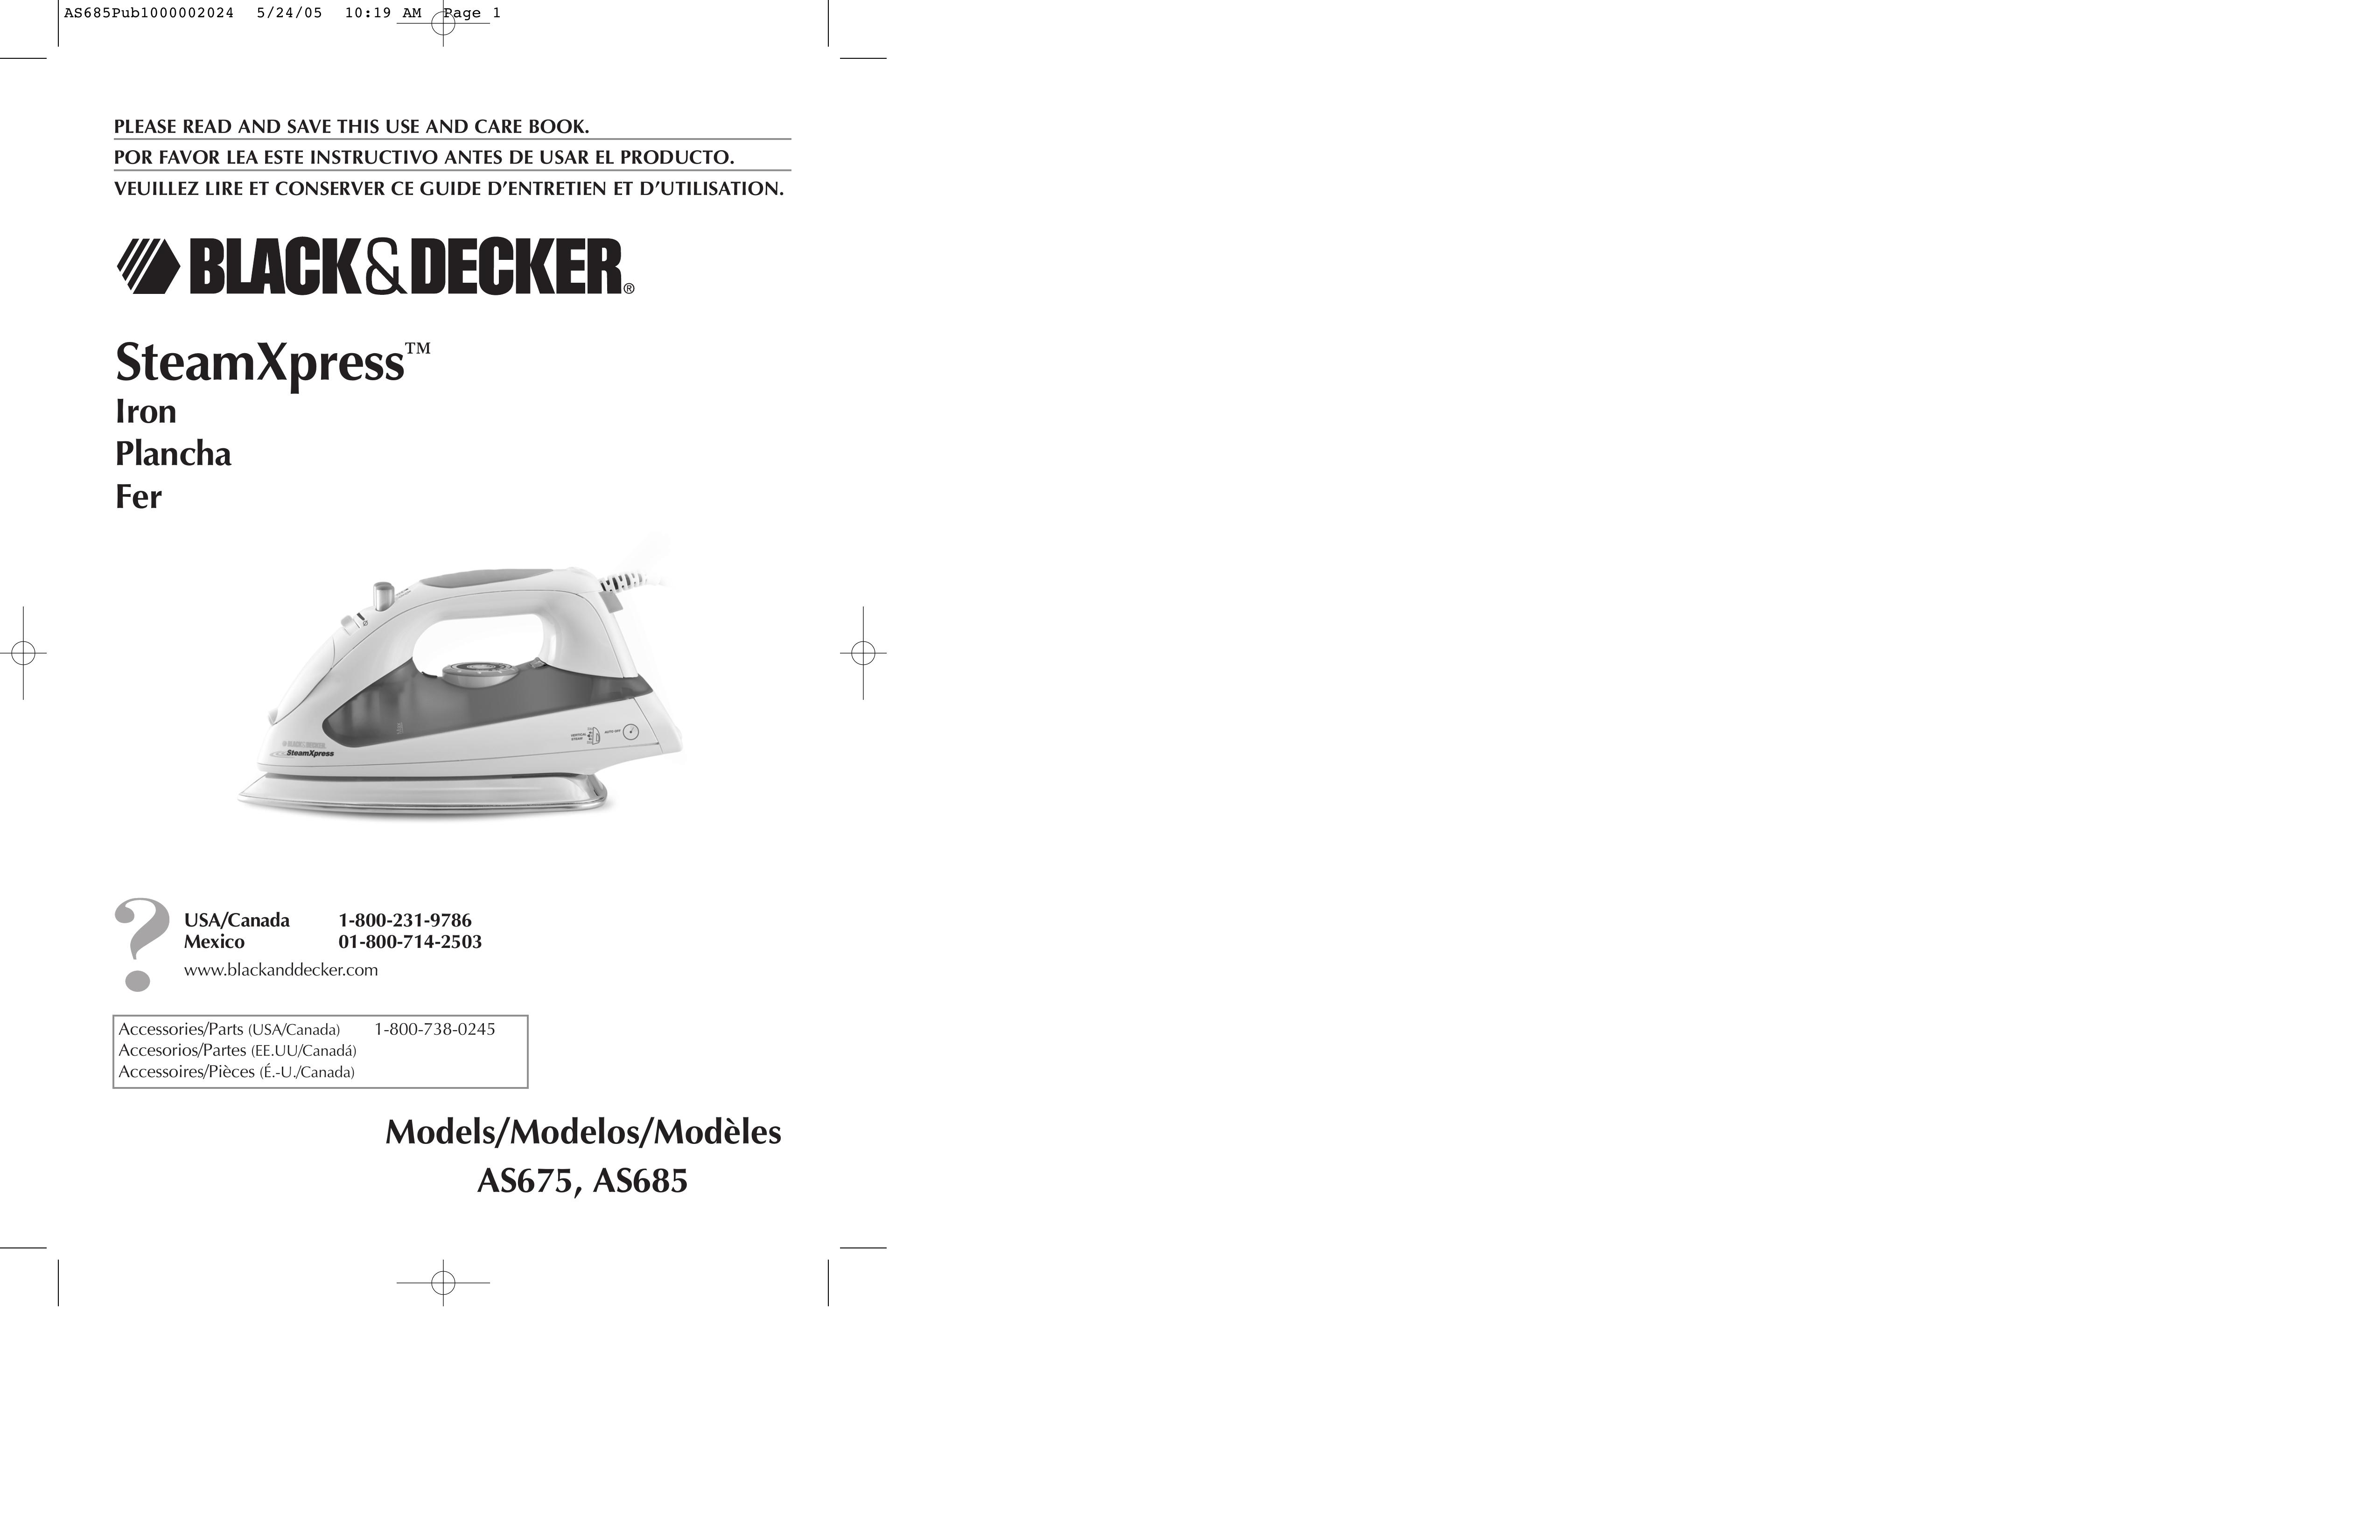 Black & Decker AS675 Iron User Manual (Page 1)